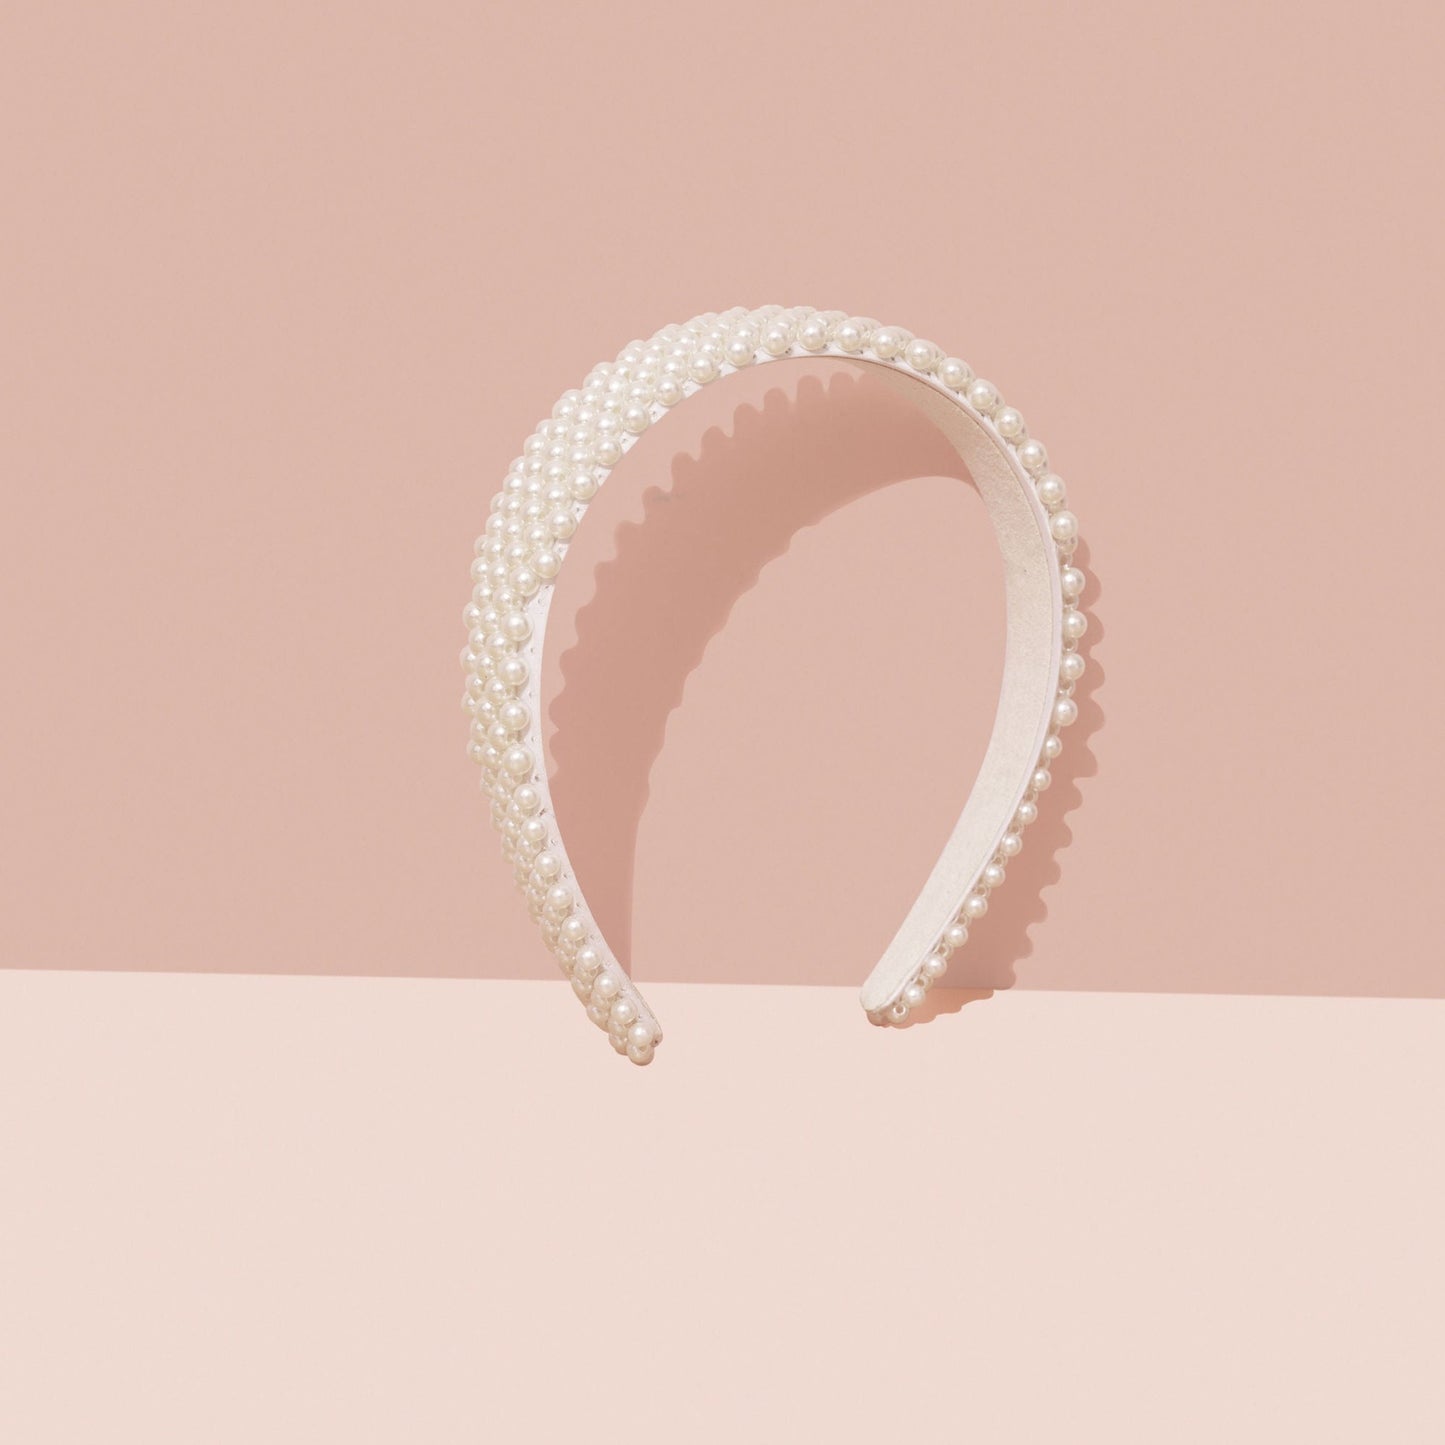 White pearl headband